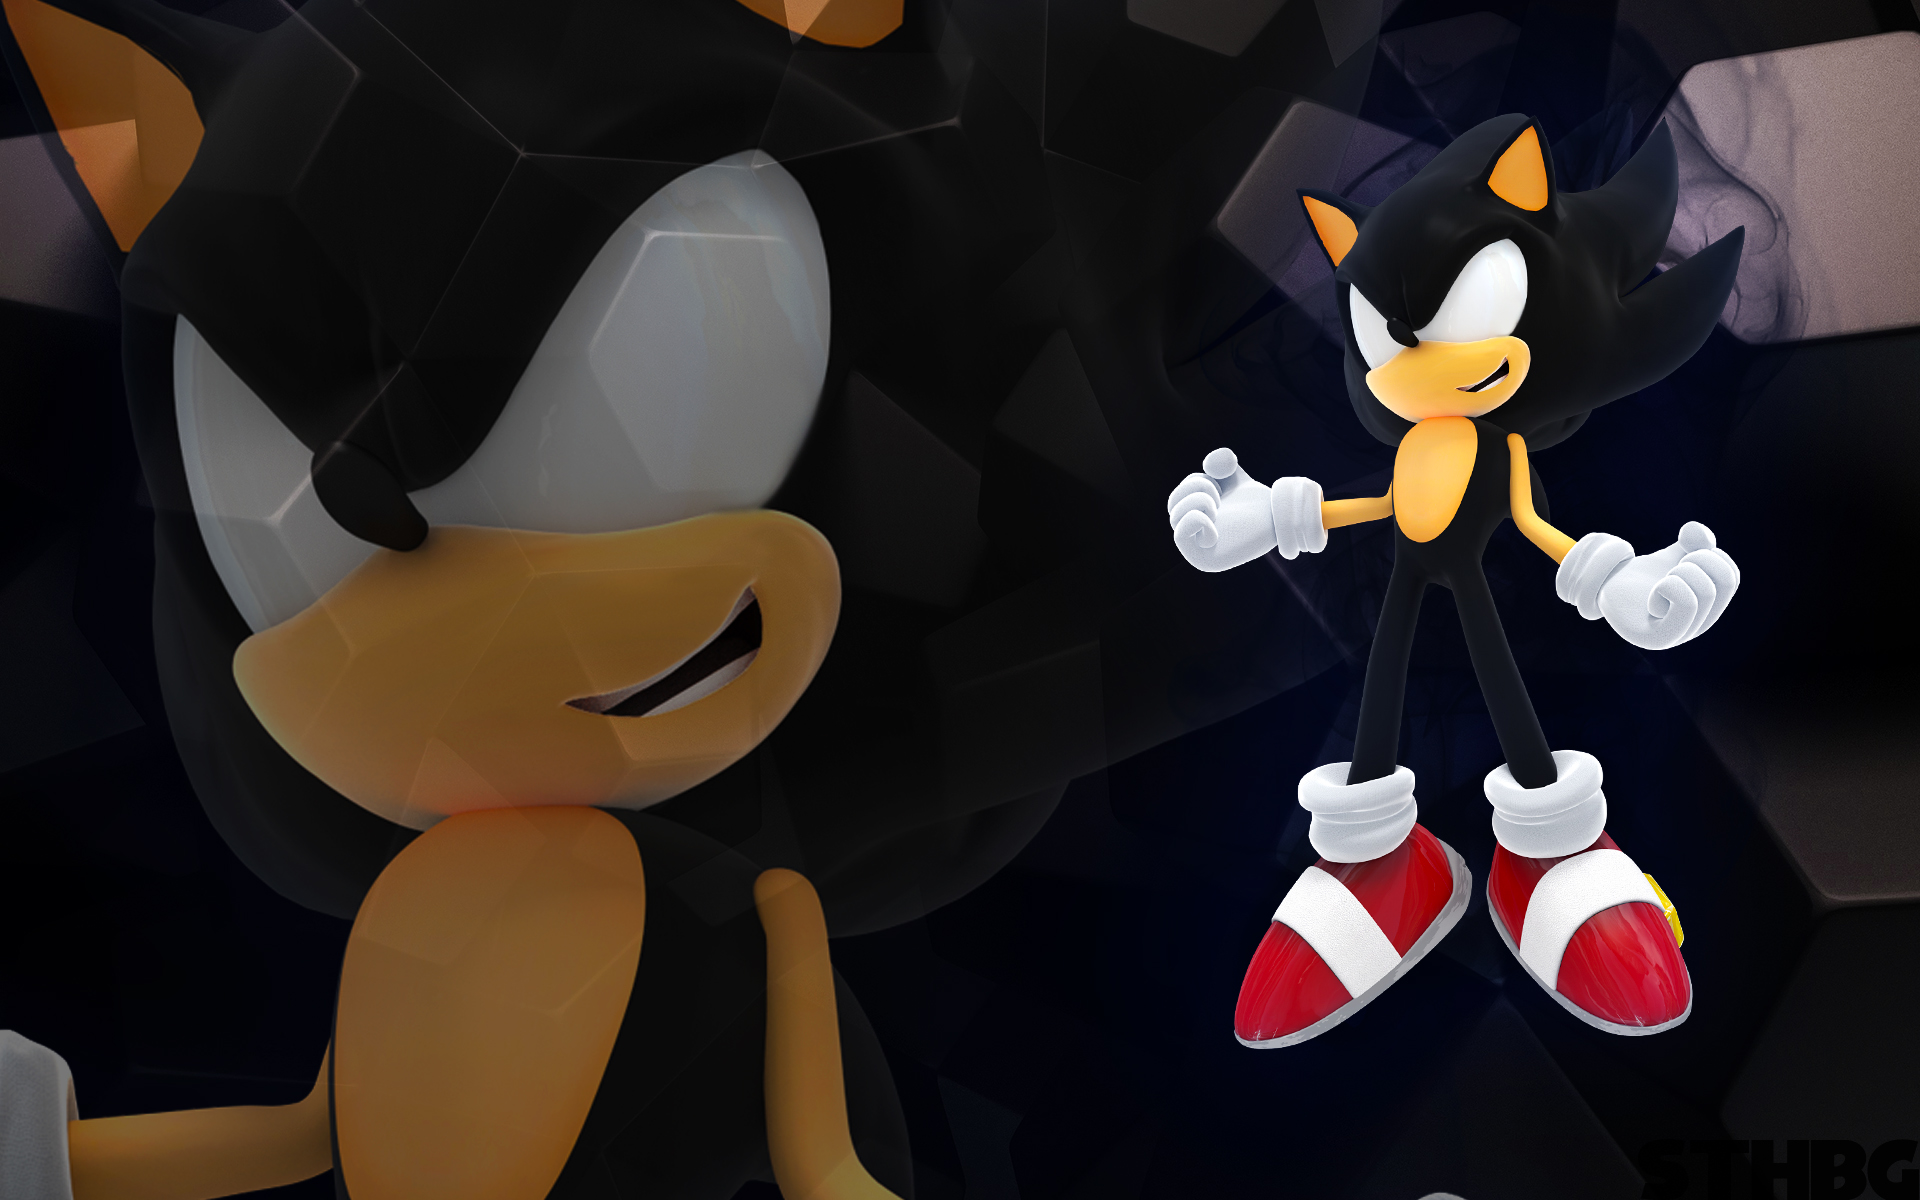 Dark Sonic The Hedgehog Wallpaper by SonicTheHedgehogBG on